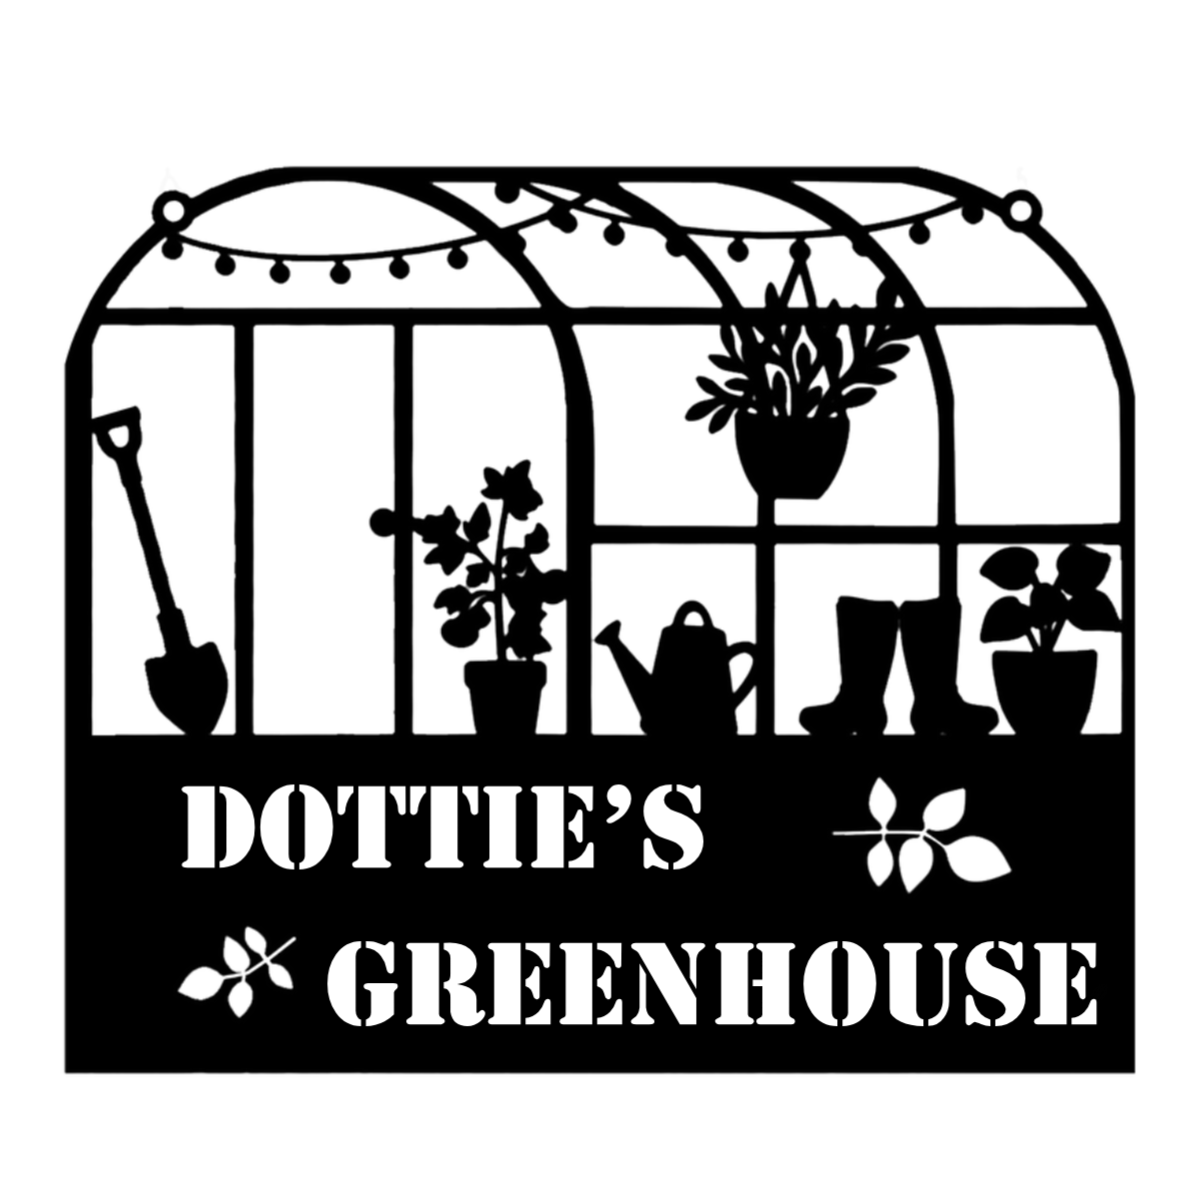 Personalized Hanging Metal Greenhouse Decorations Sign, Custom Gardener Gift